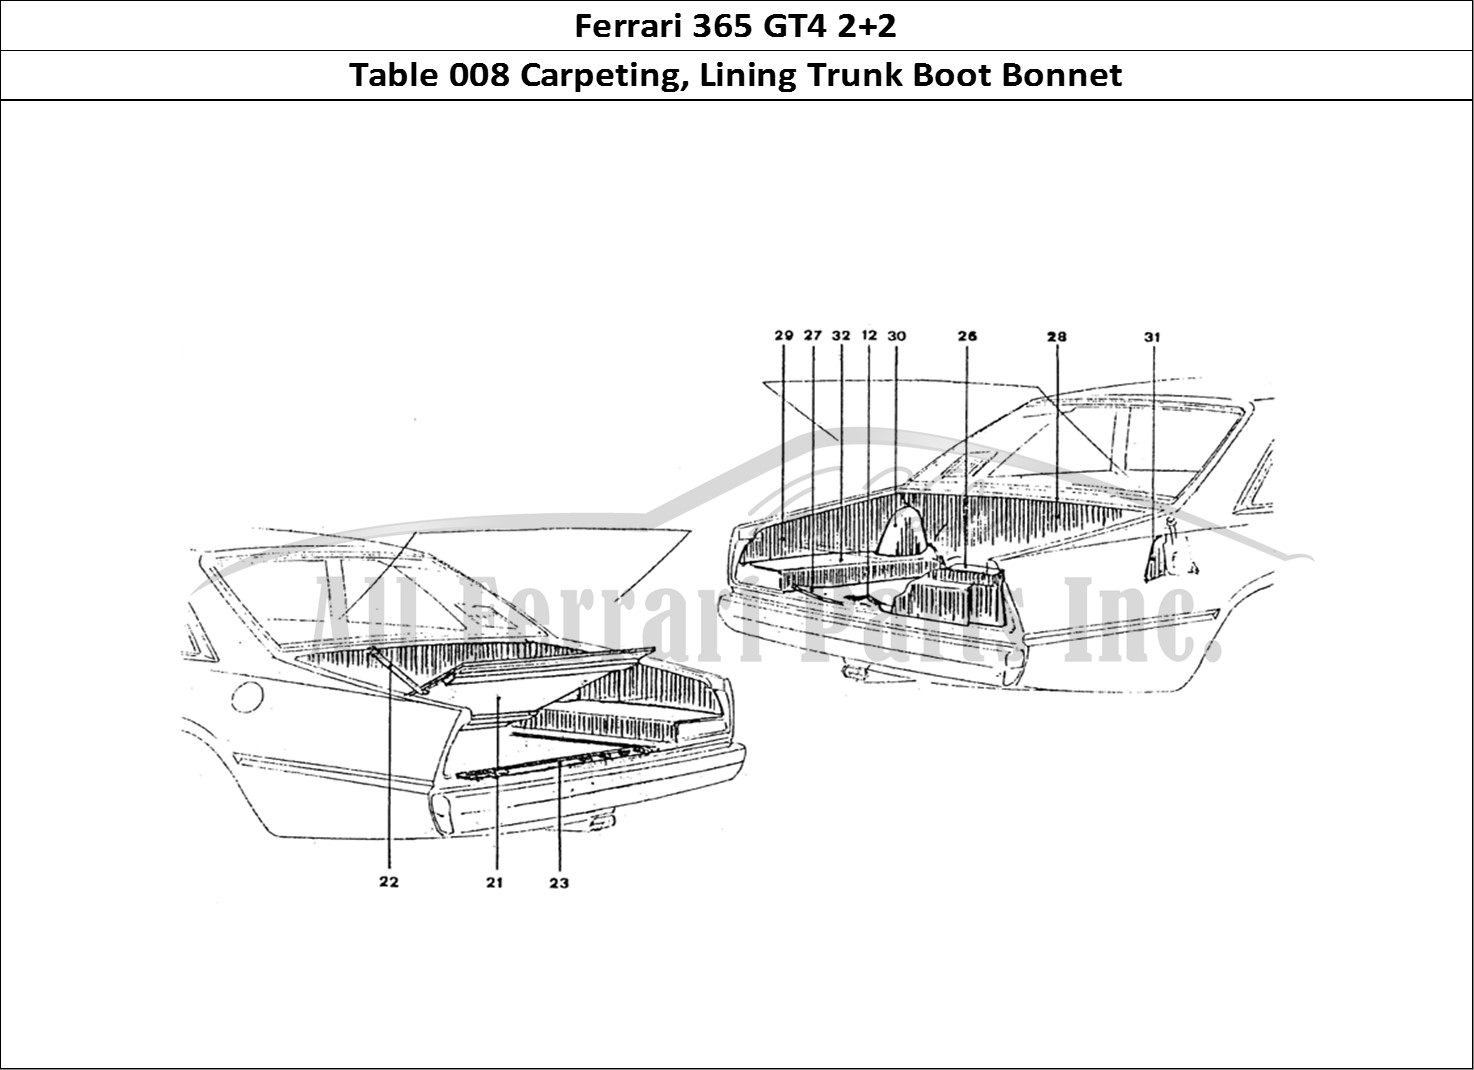 Ferrari Parts Ferrari 365 GT4 2+2 Coachwork Page 008 Inner Boot trim & Carpet